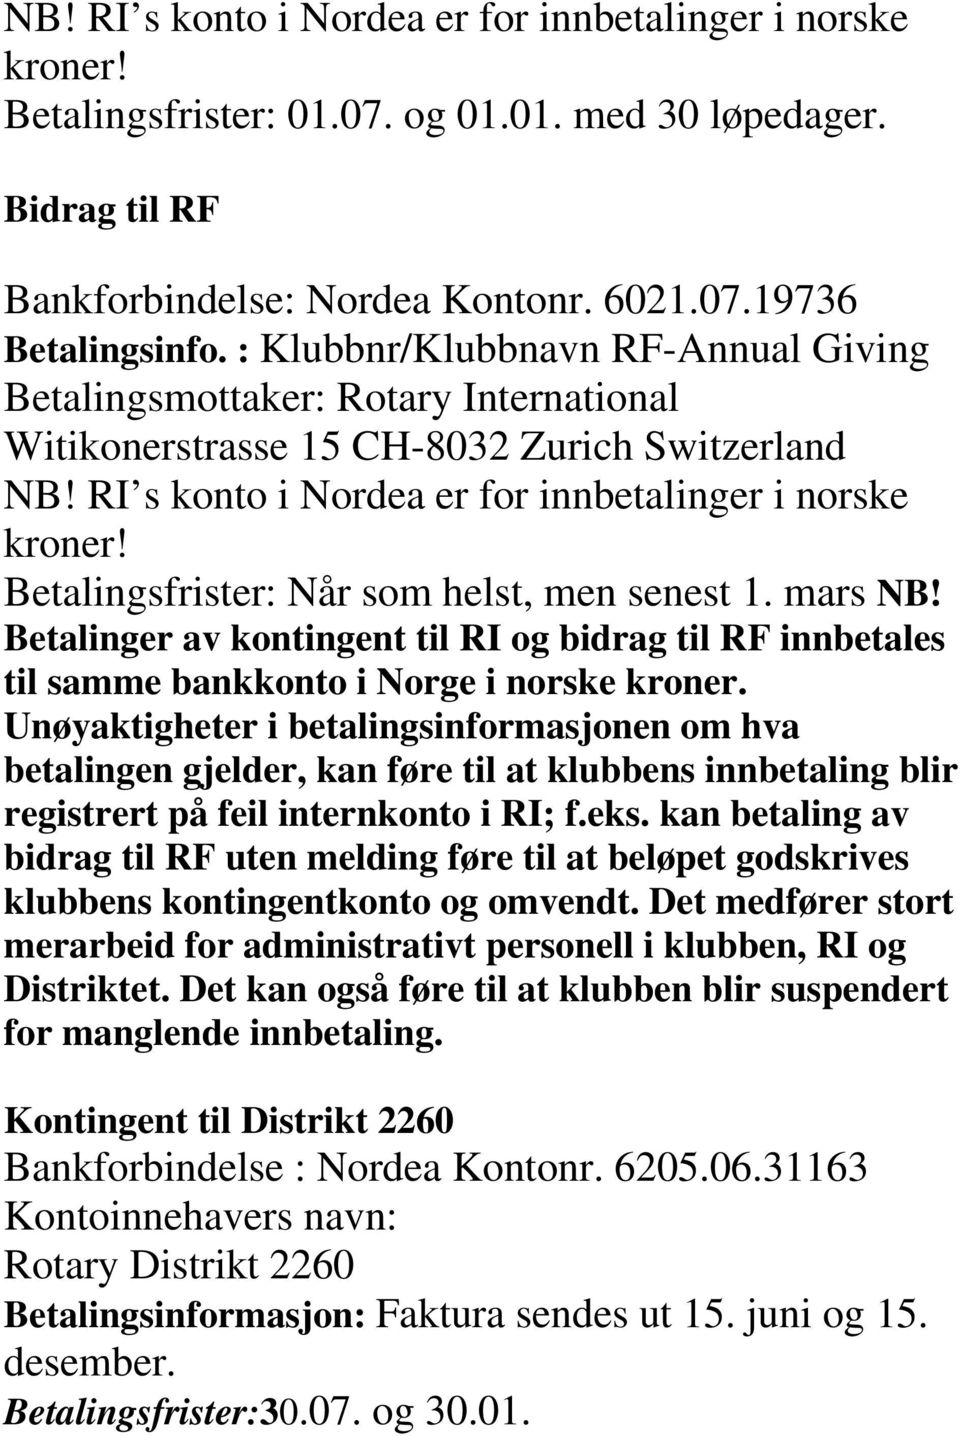 Betalingsfrister: Når som helst, men senest 1. mars NB! Betalinger av kontingent til RI og bidrag til RF innbetales til samme bankkonto i Norge i norske kroner.